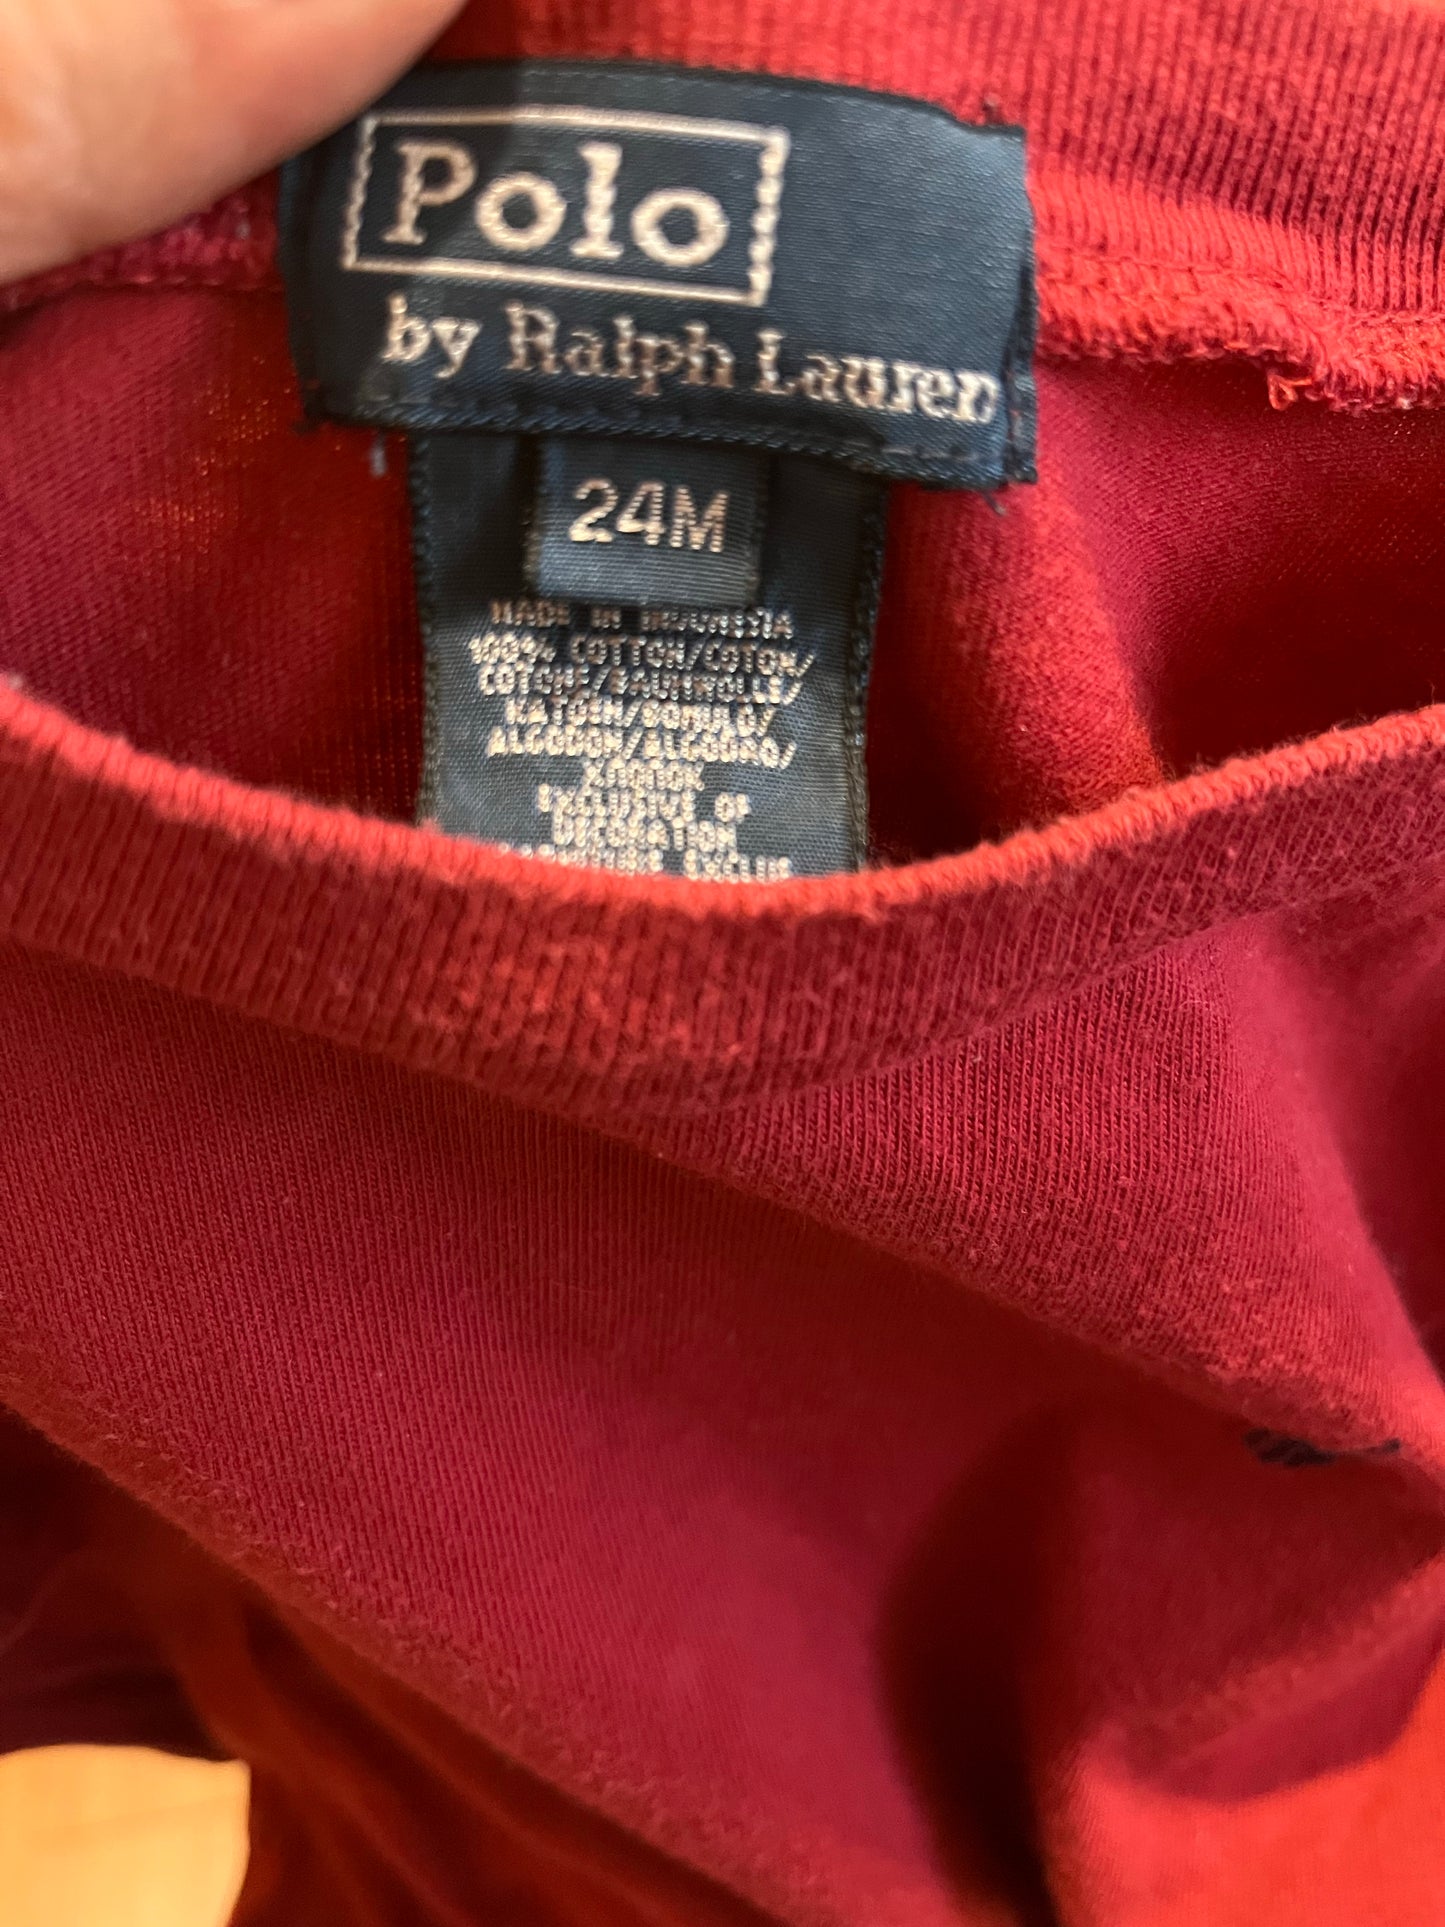 Polo Ralph Lauren Basic Long-Sleeve (24M)